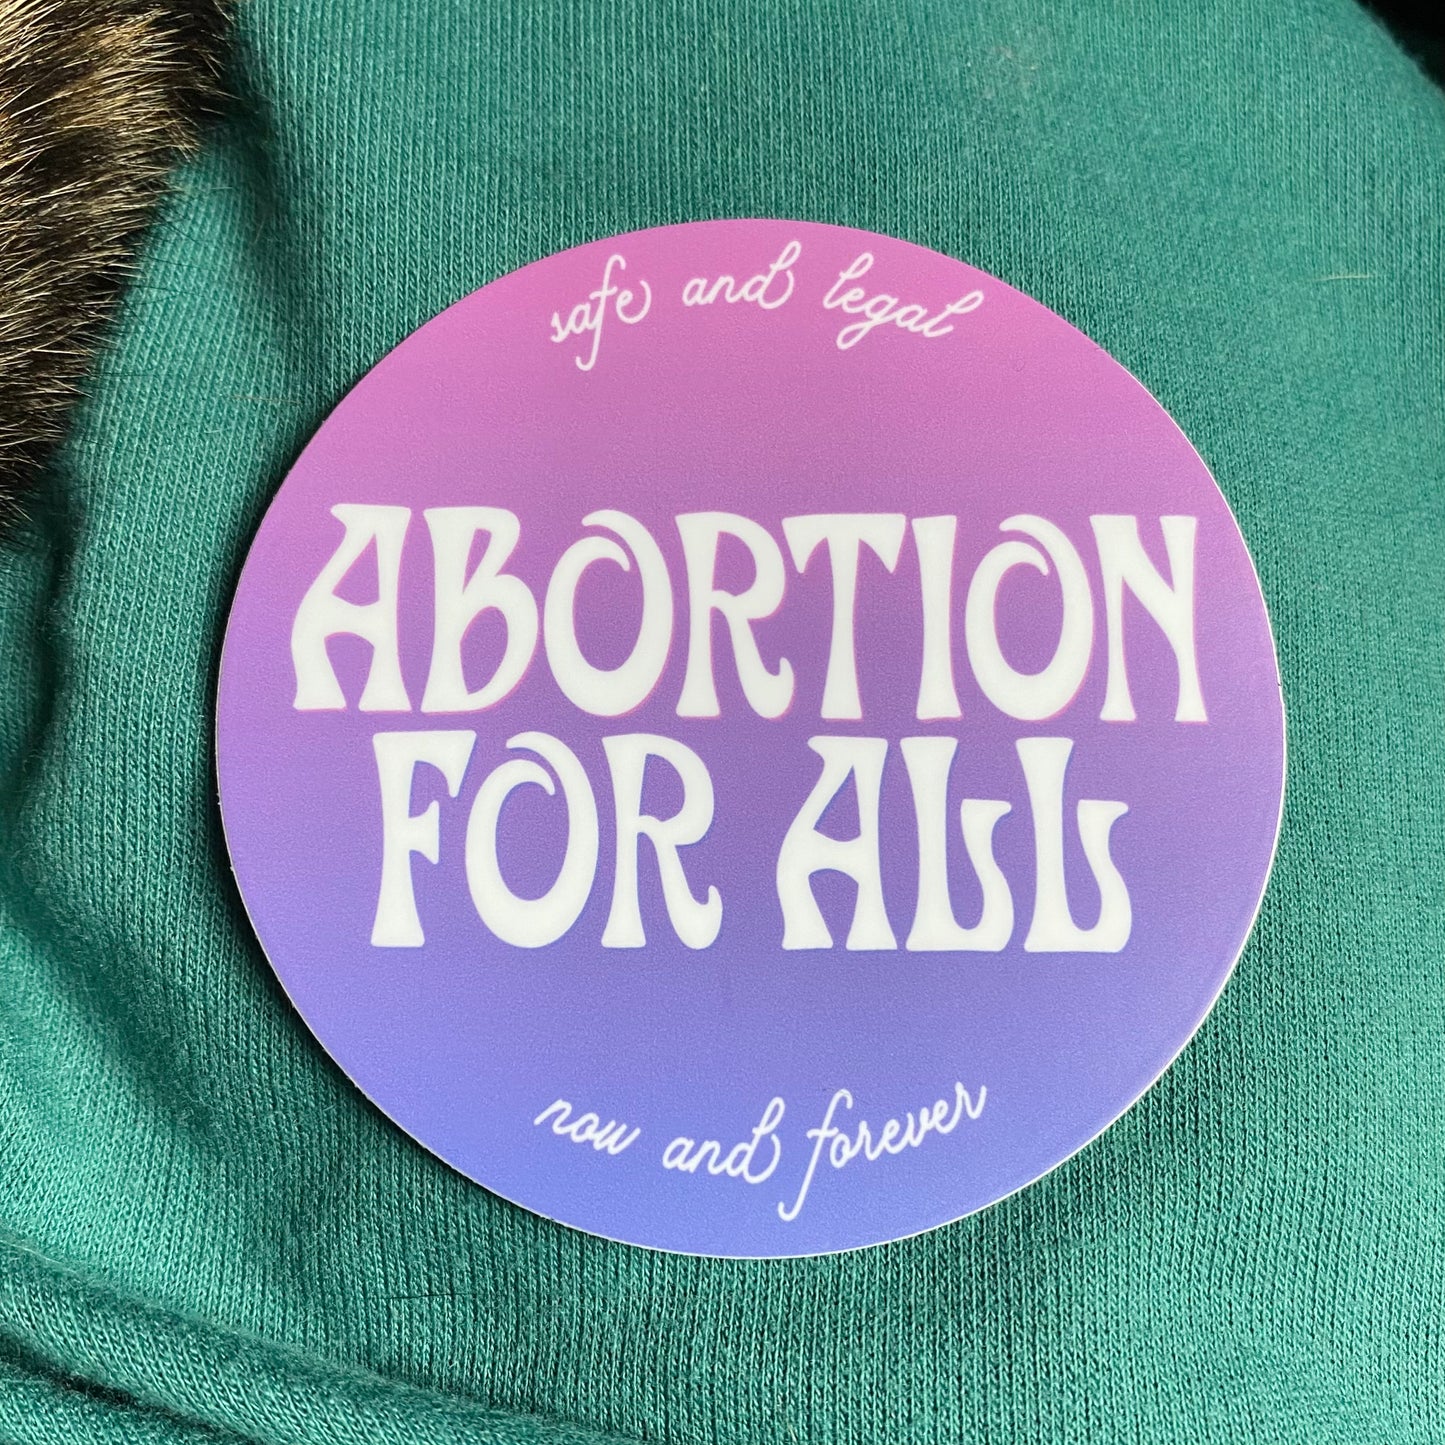 Abortion For All - Fundraising Vinyl Sticker